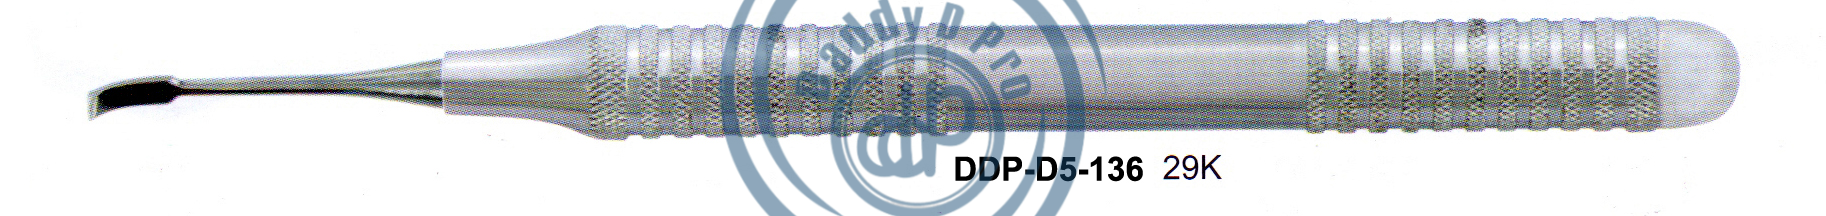 images/DDP-D5-136.png